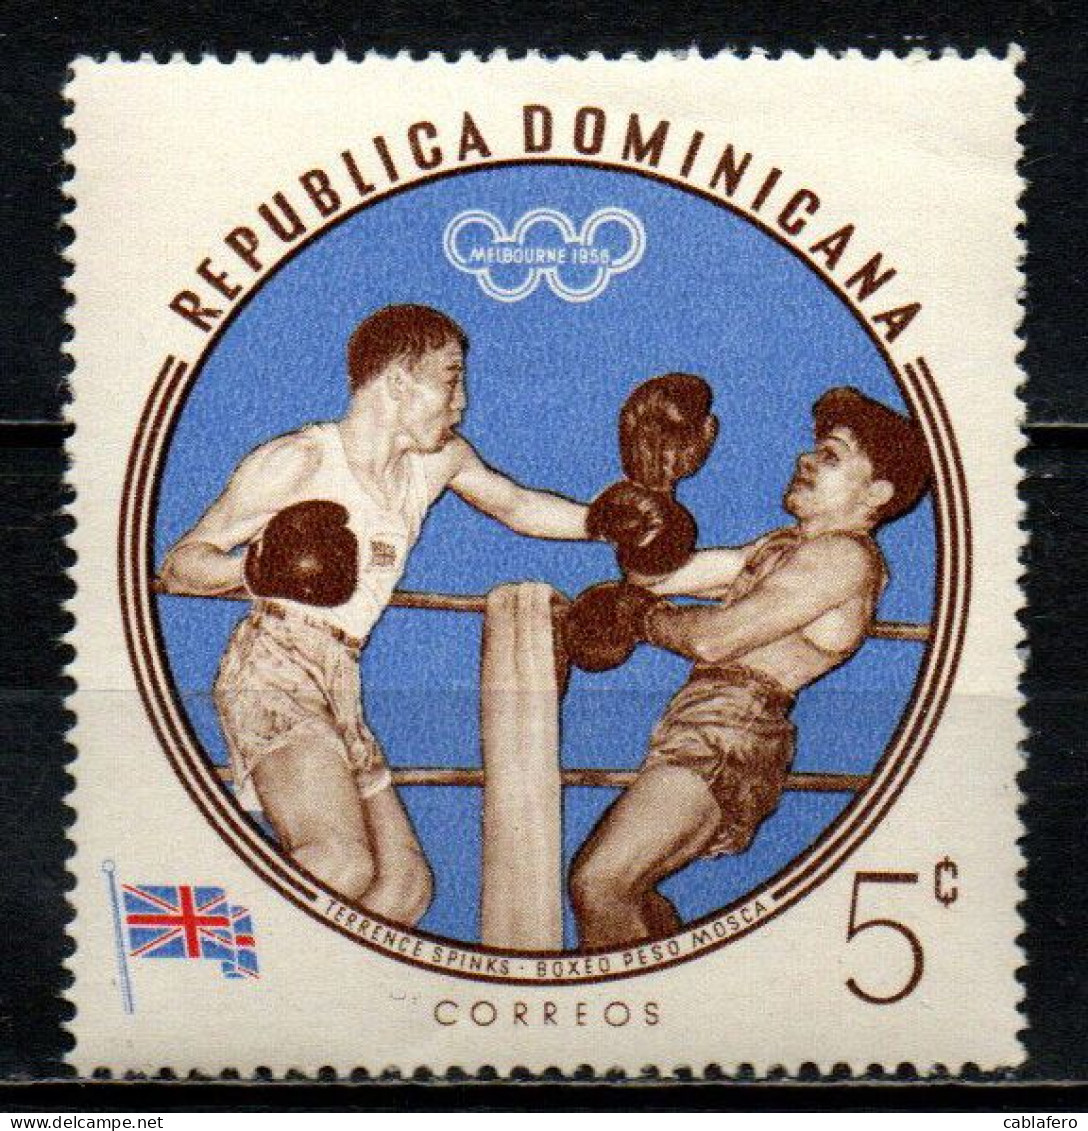 REPUBBLICA DOMENICANA - 1960 - TERRENCE SPINKS - OLIMPIADI DI MELBOURNE -MNH - Dominicaine (République)